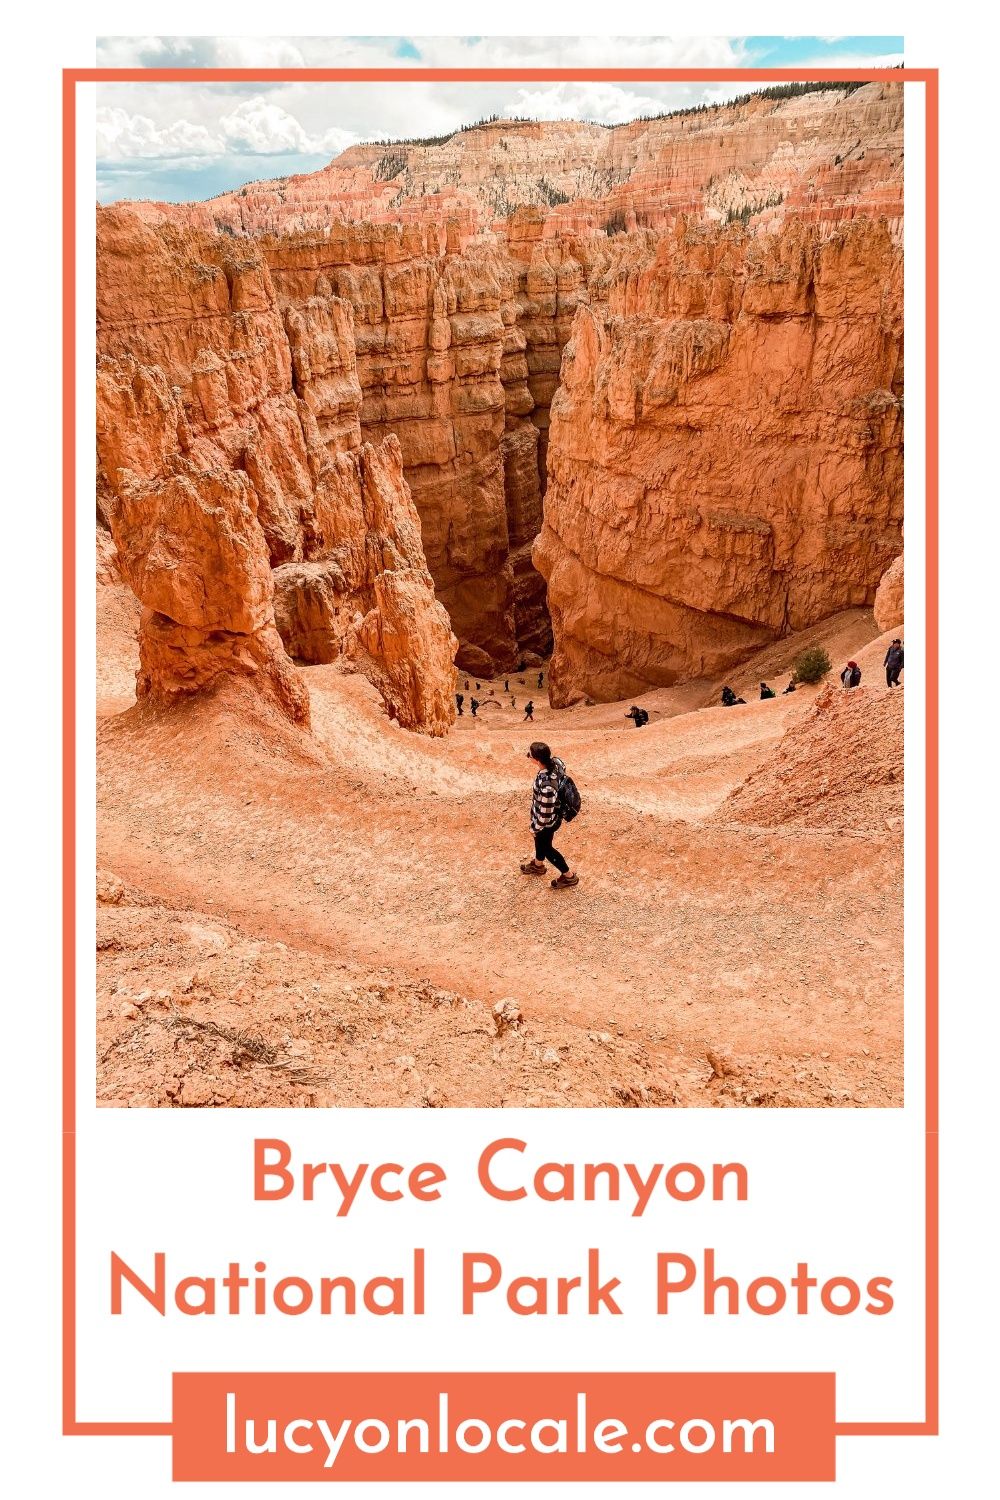 Bryce Canyon National Park photos